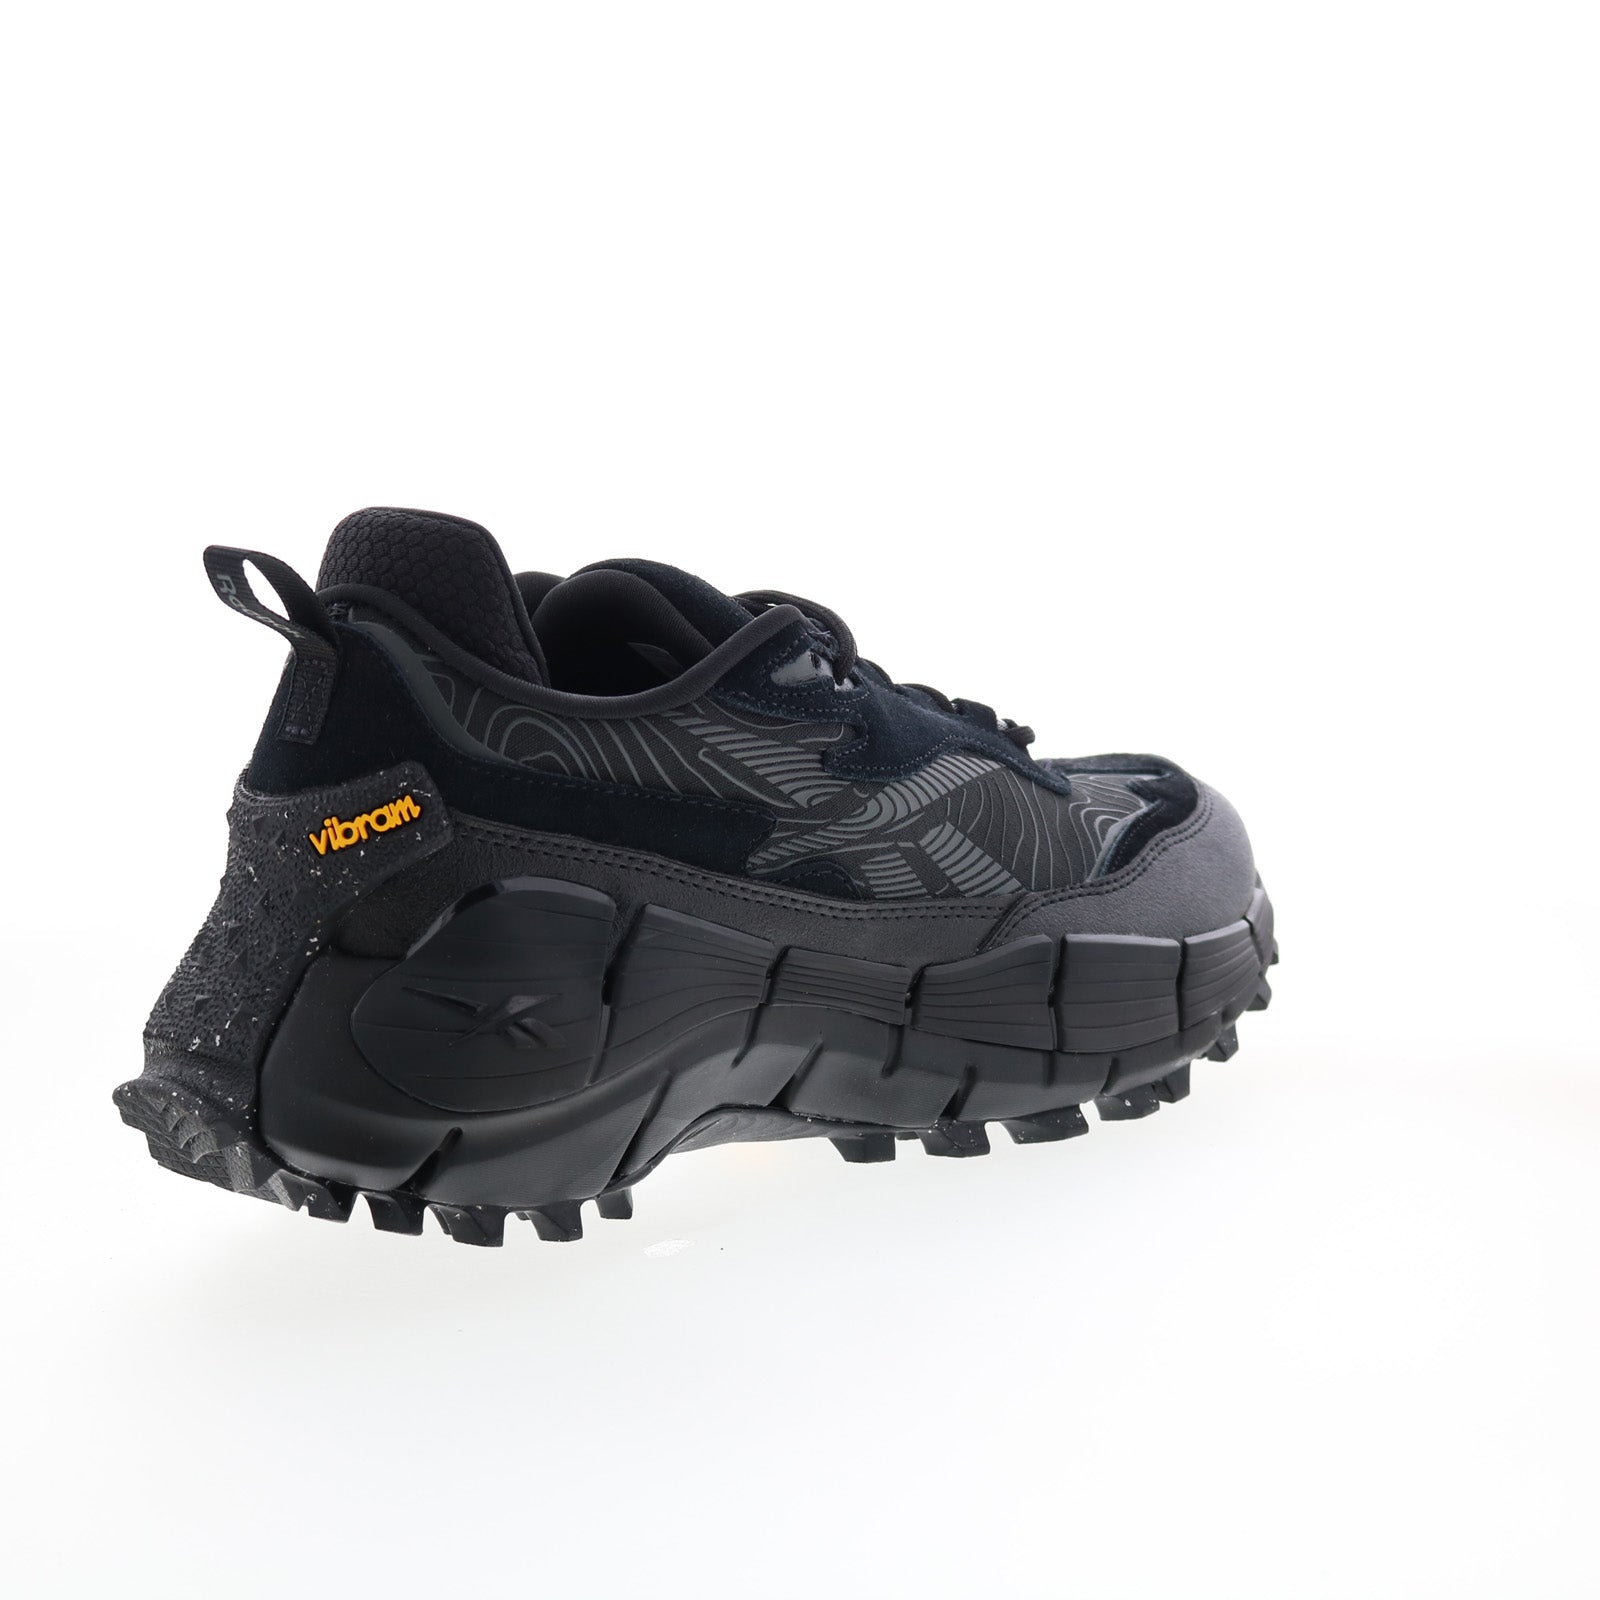 Reebok Zig Kinetica 2.5 Edge GZ1440 Mens Black Athletic Running Shoes